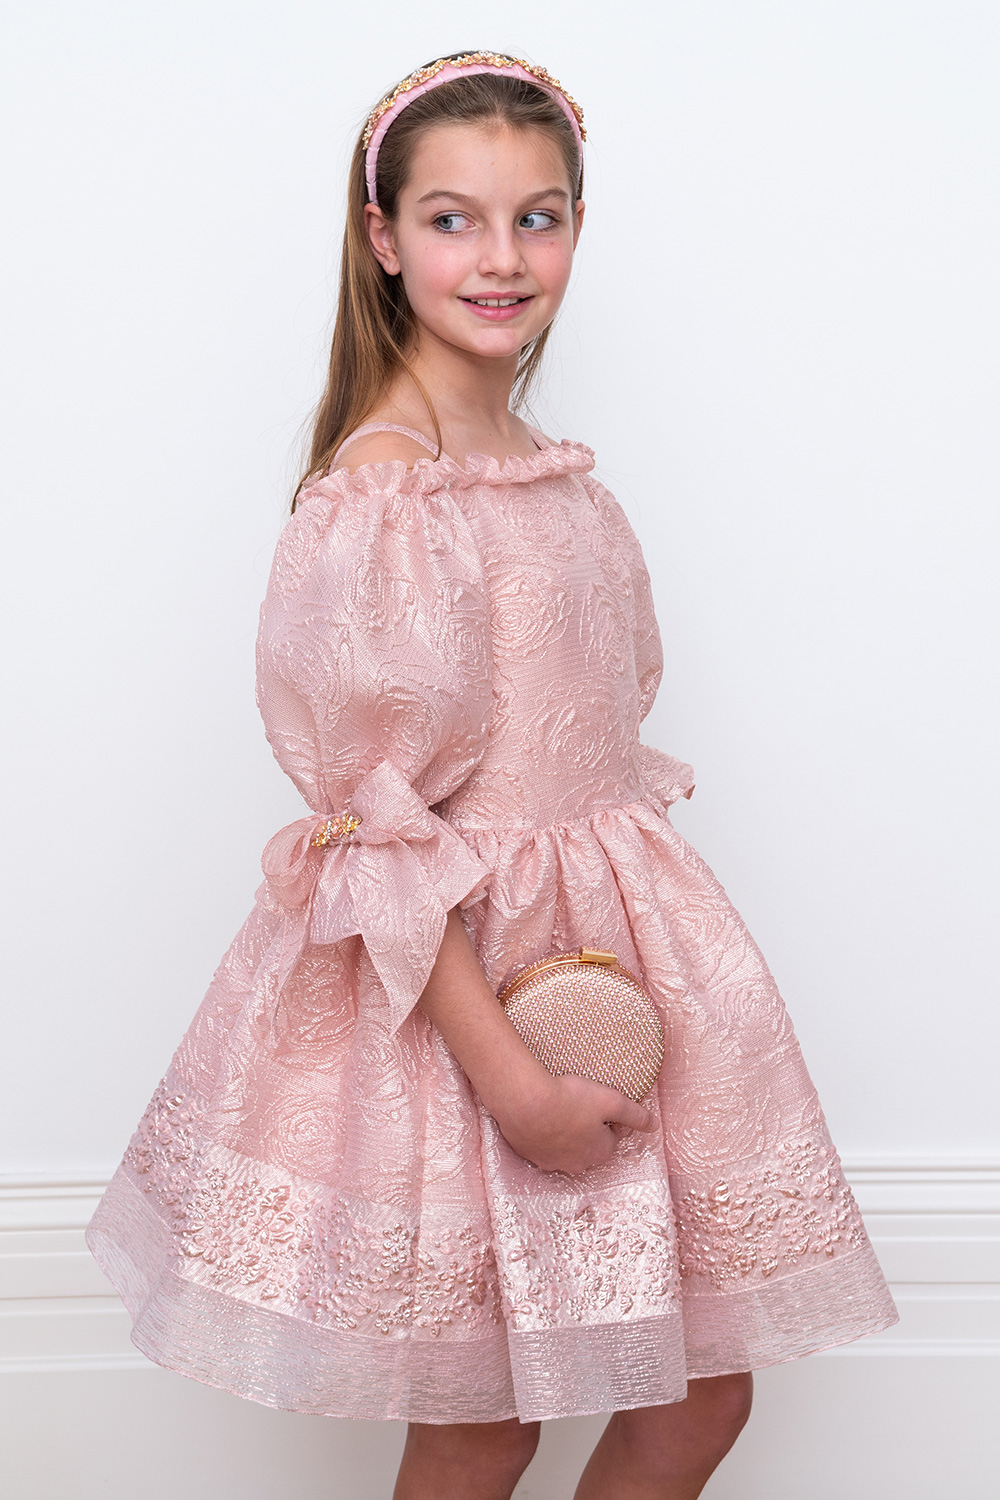 Little Adventures Deluxe Pink Princess Dress Up Costume